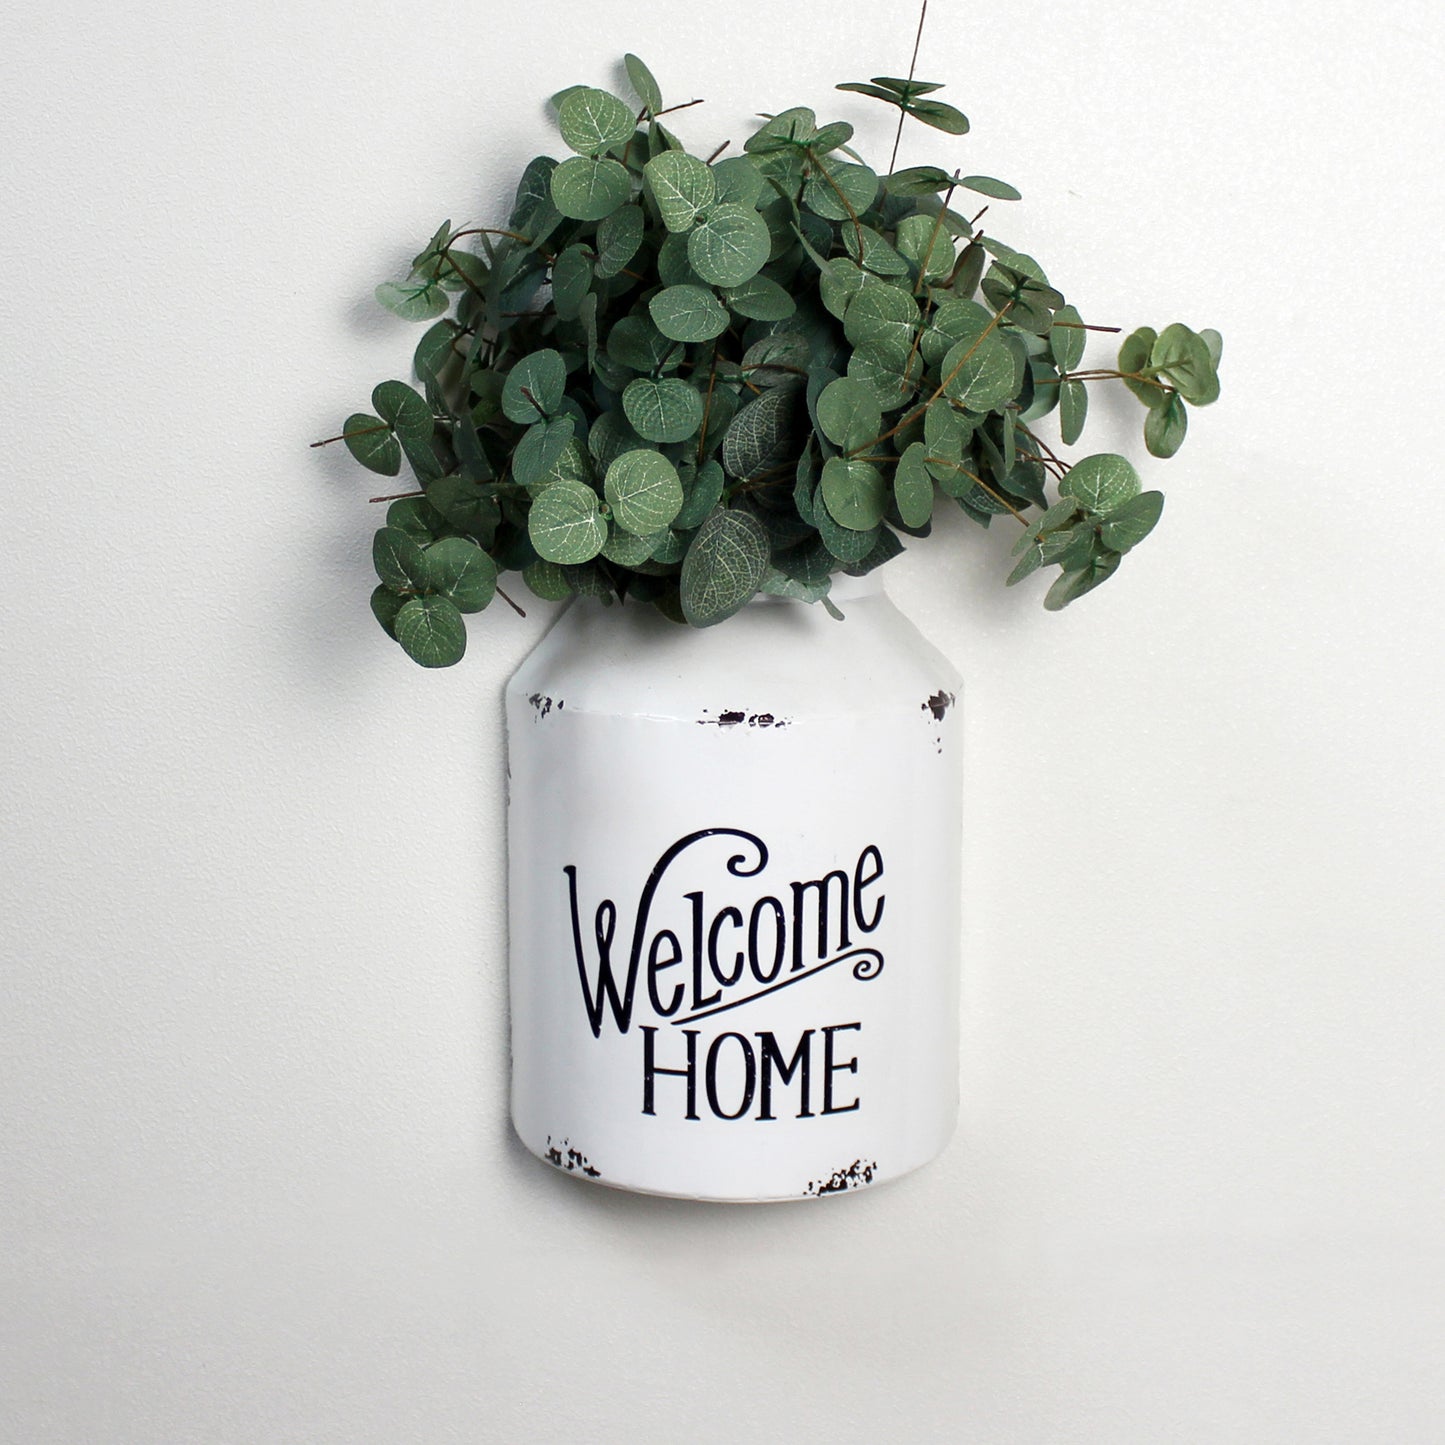 CVHOMEDECO. Primitive Rustic Galvanized Tin Half Round Jug Vase Metal Wall Hanging Flower Holder for Home and Garden Decor, Vintage White